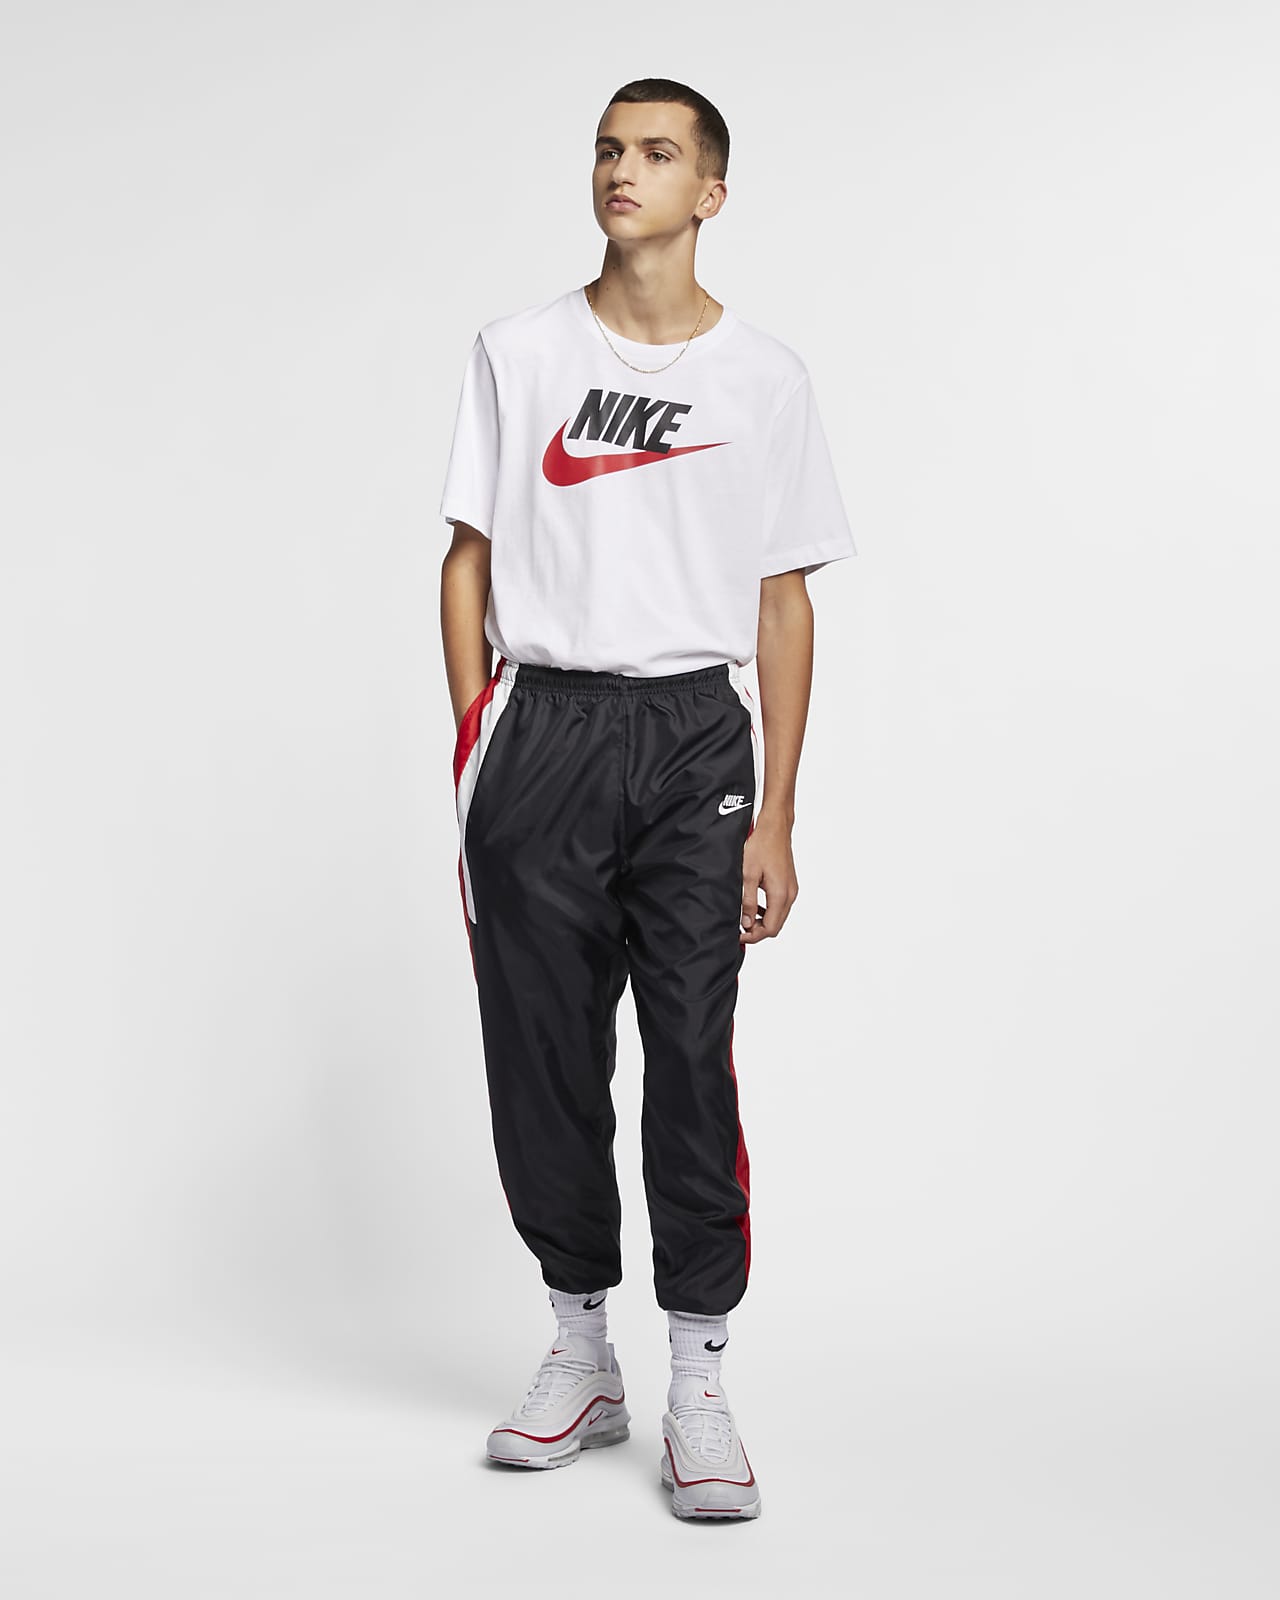 Men's T-Shirt. Nike.com